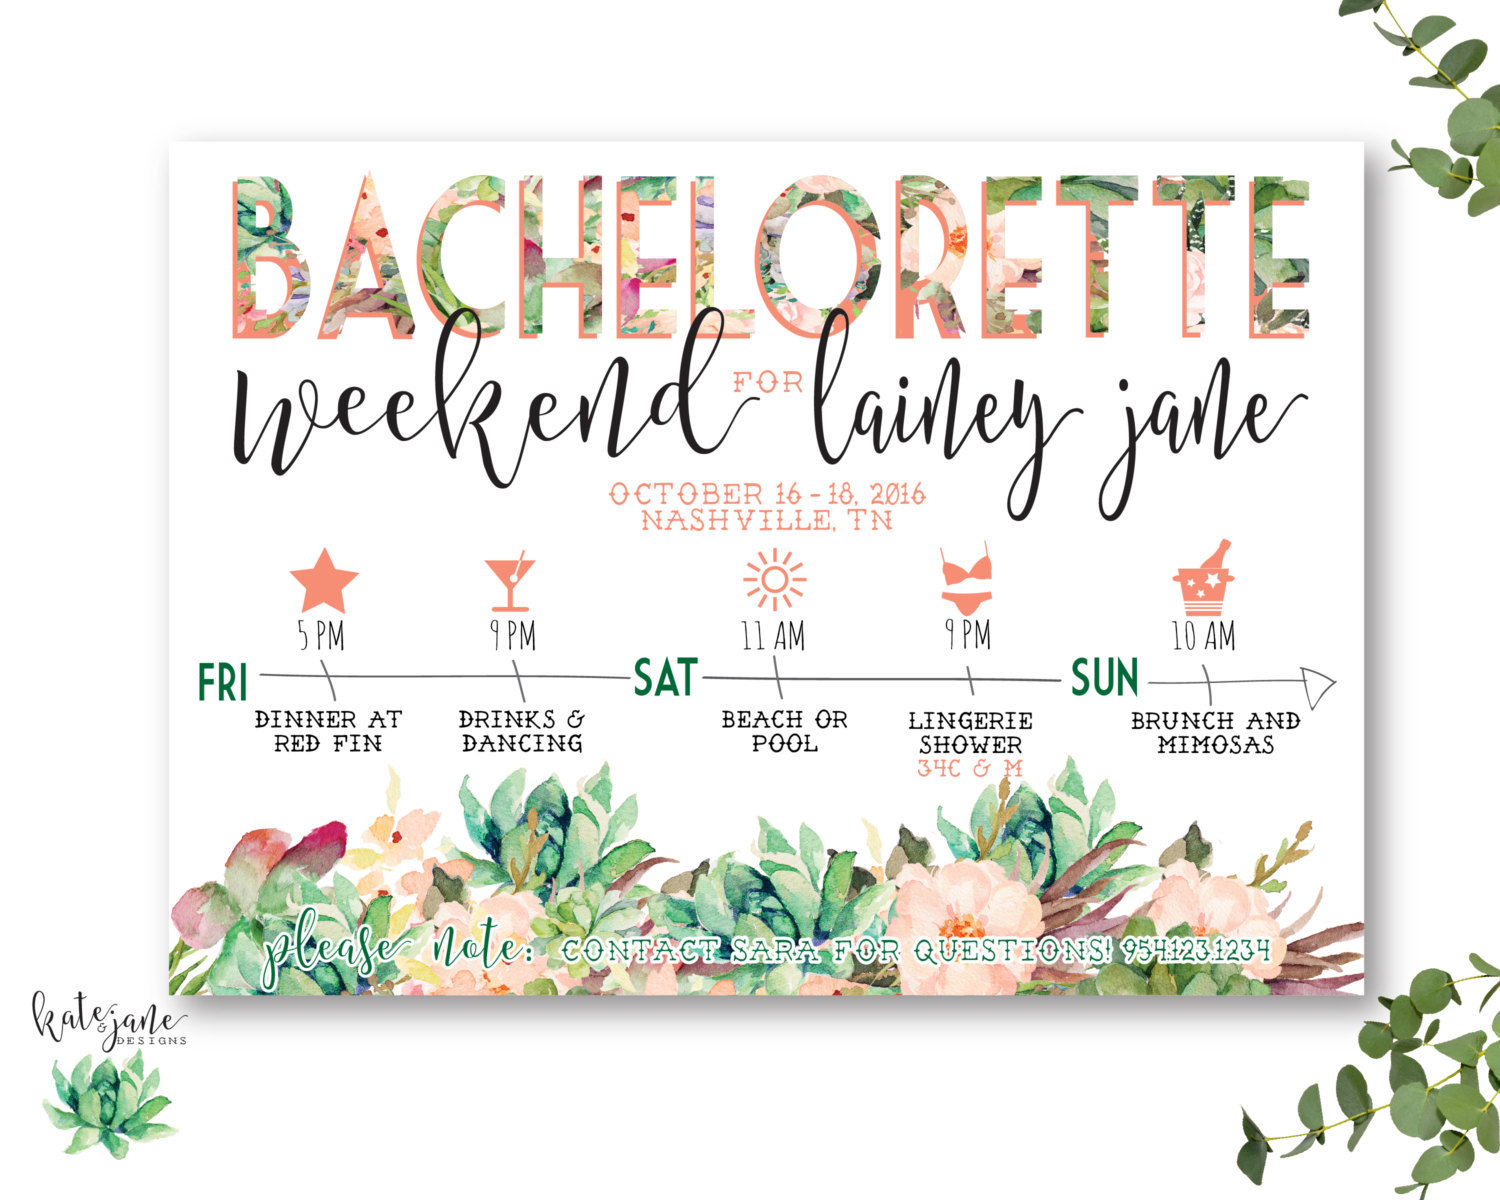 Bachelorette Weekend Invitations 5